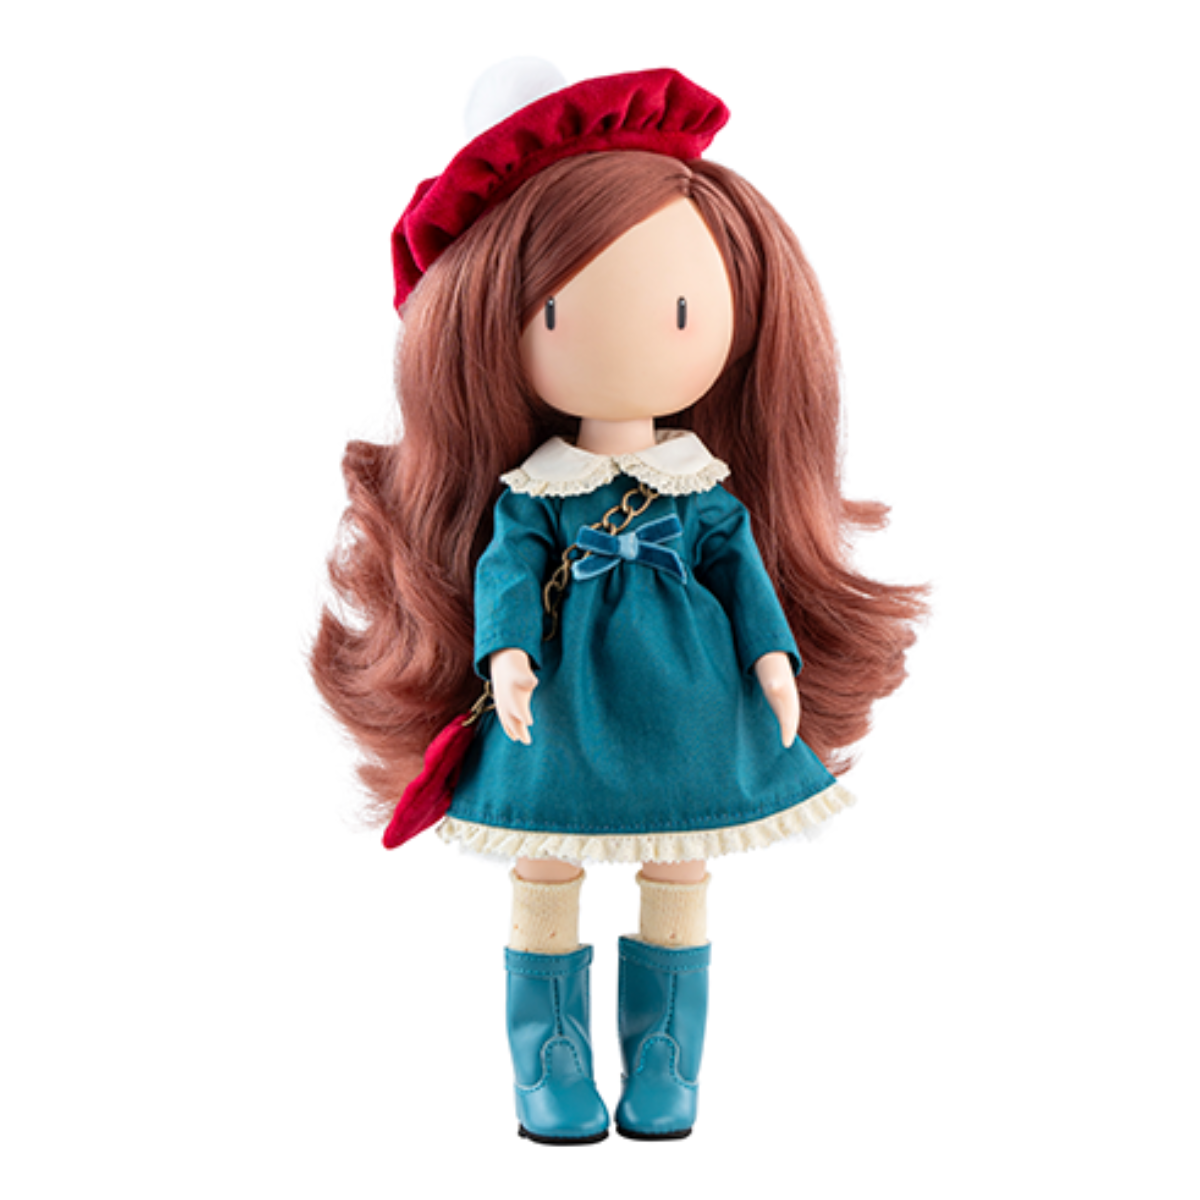 A wonderful Spanish Santoro doll 32cm 04939